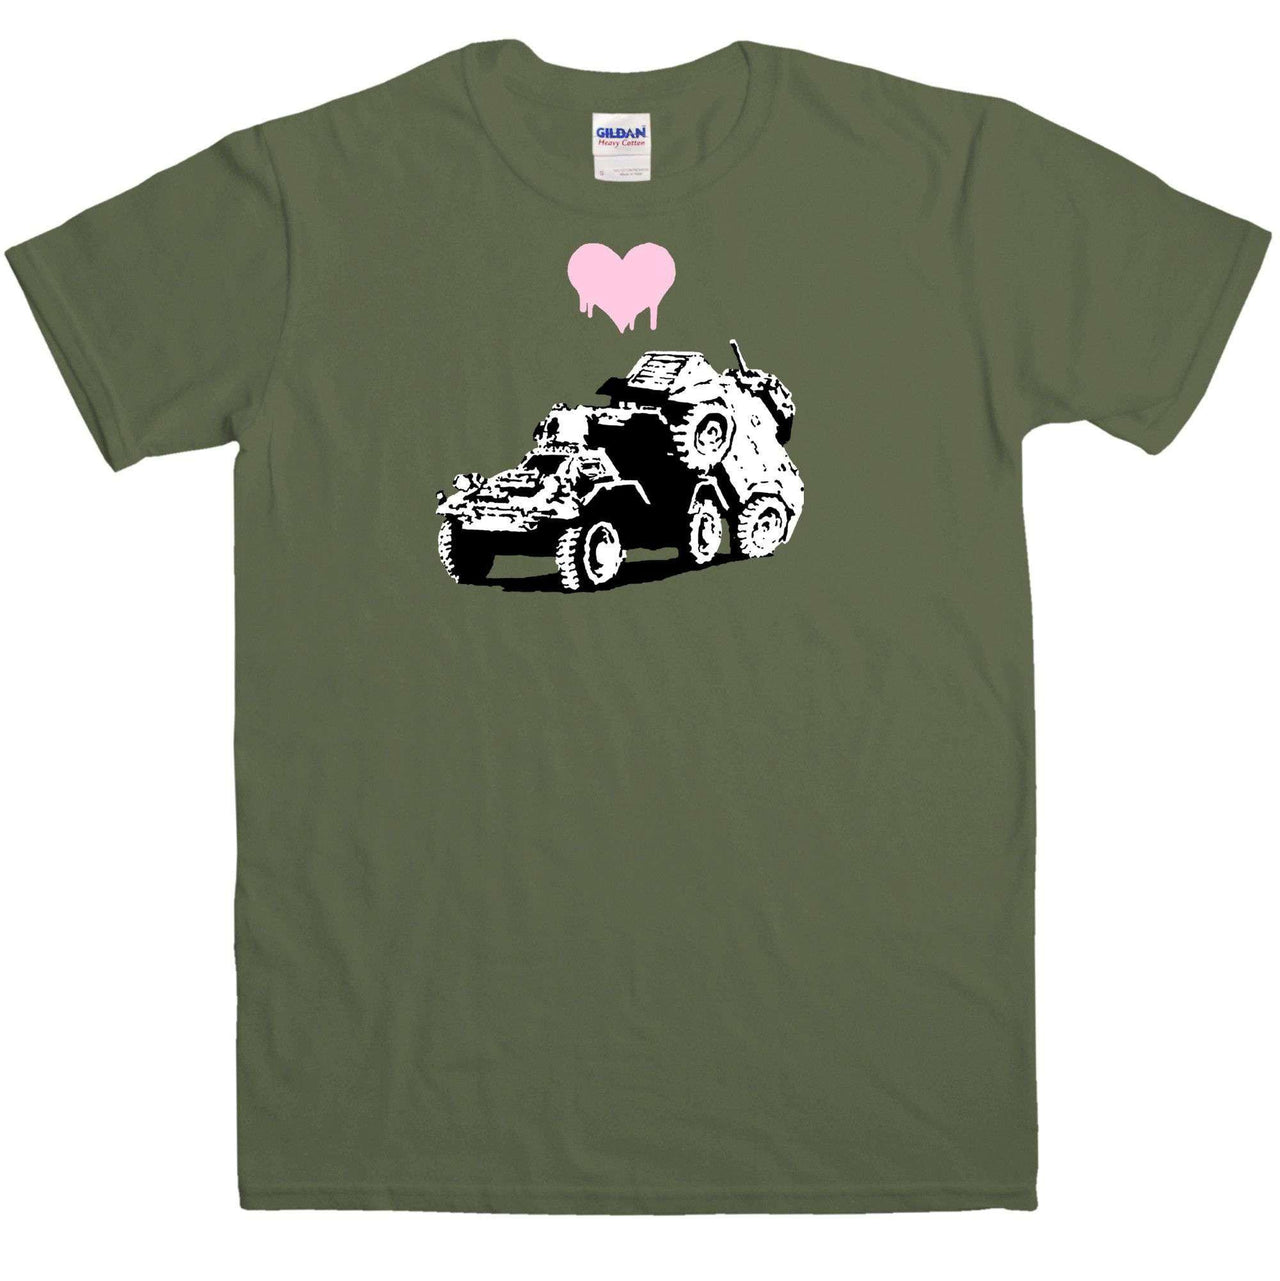 Banksy Love Tanks Mens T-Shirt 8Ball